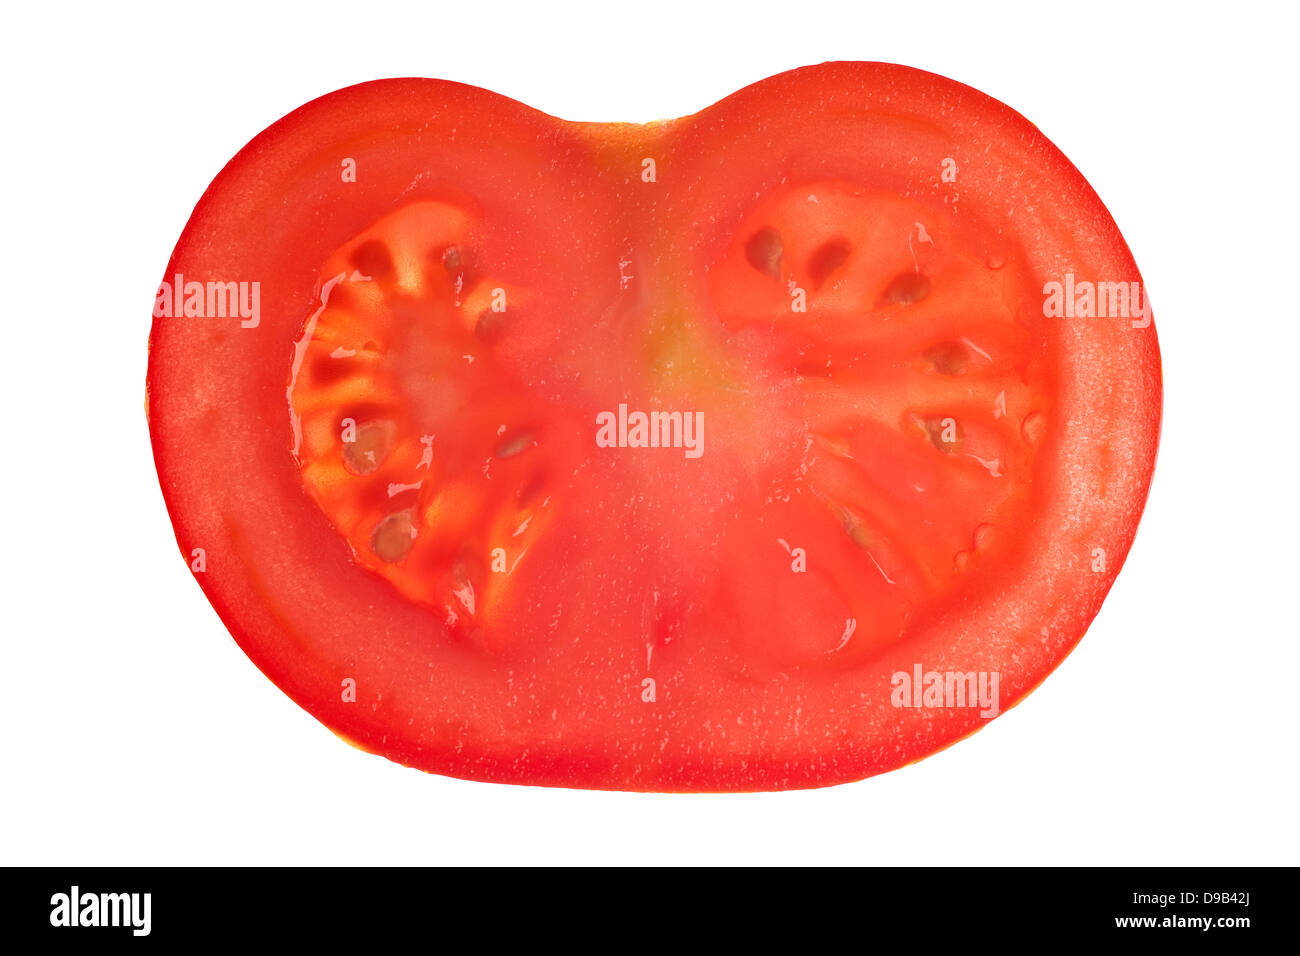 red tomato slice isolated on white background Stock Photo